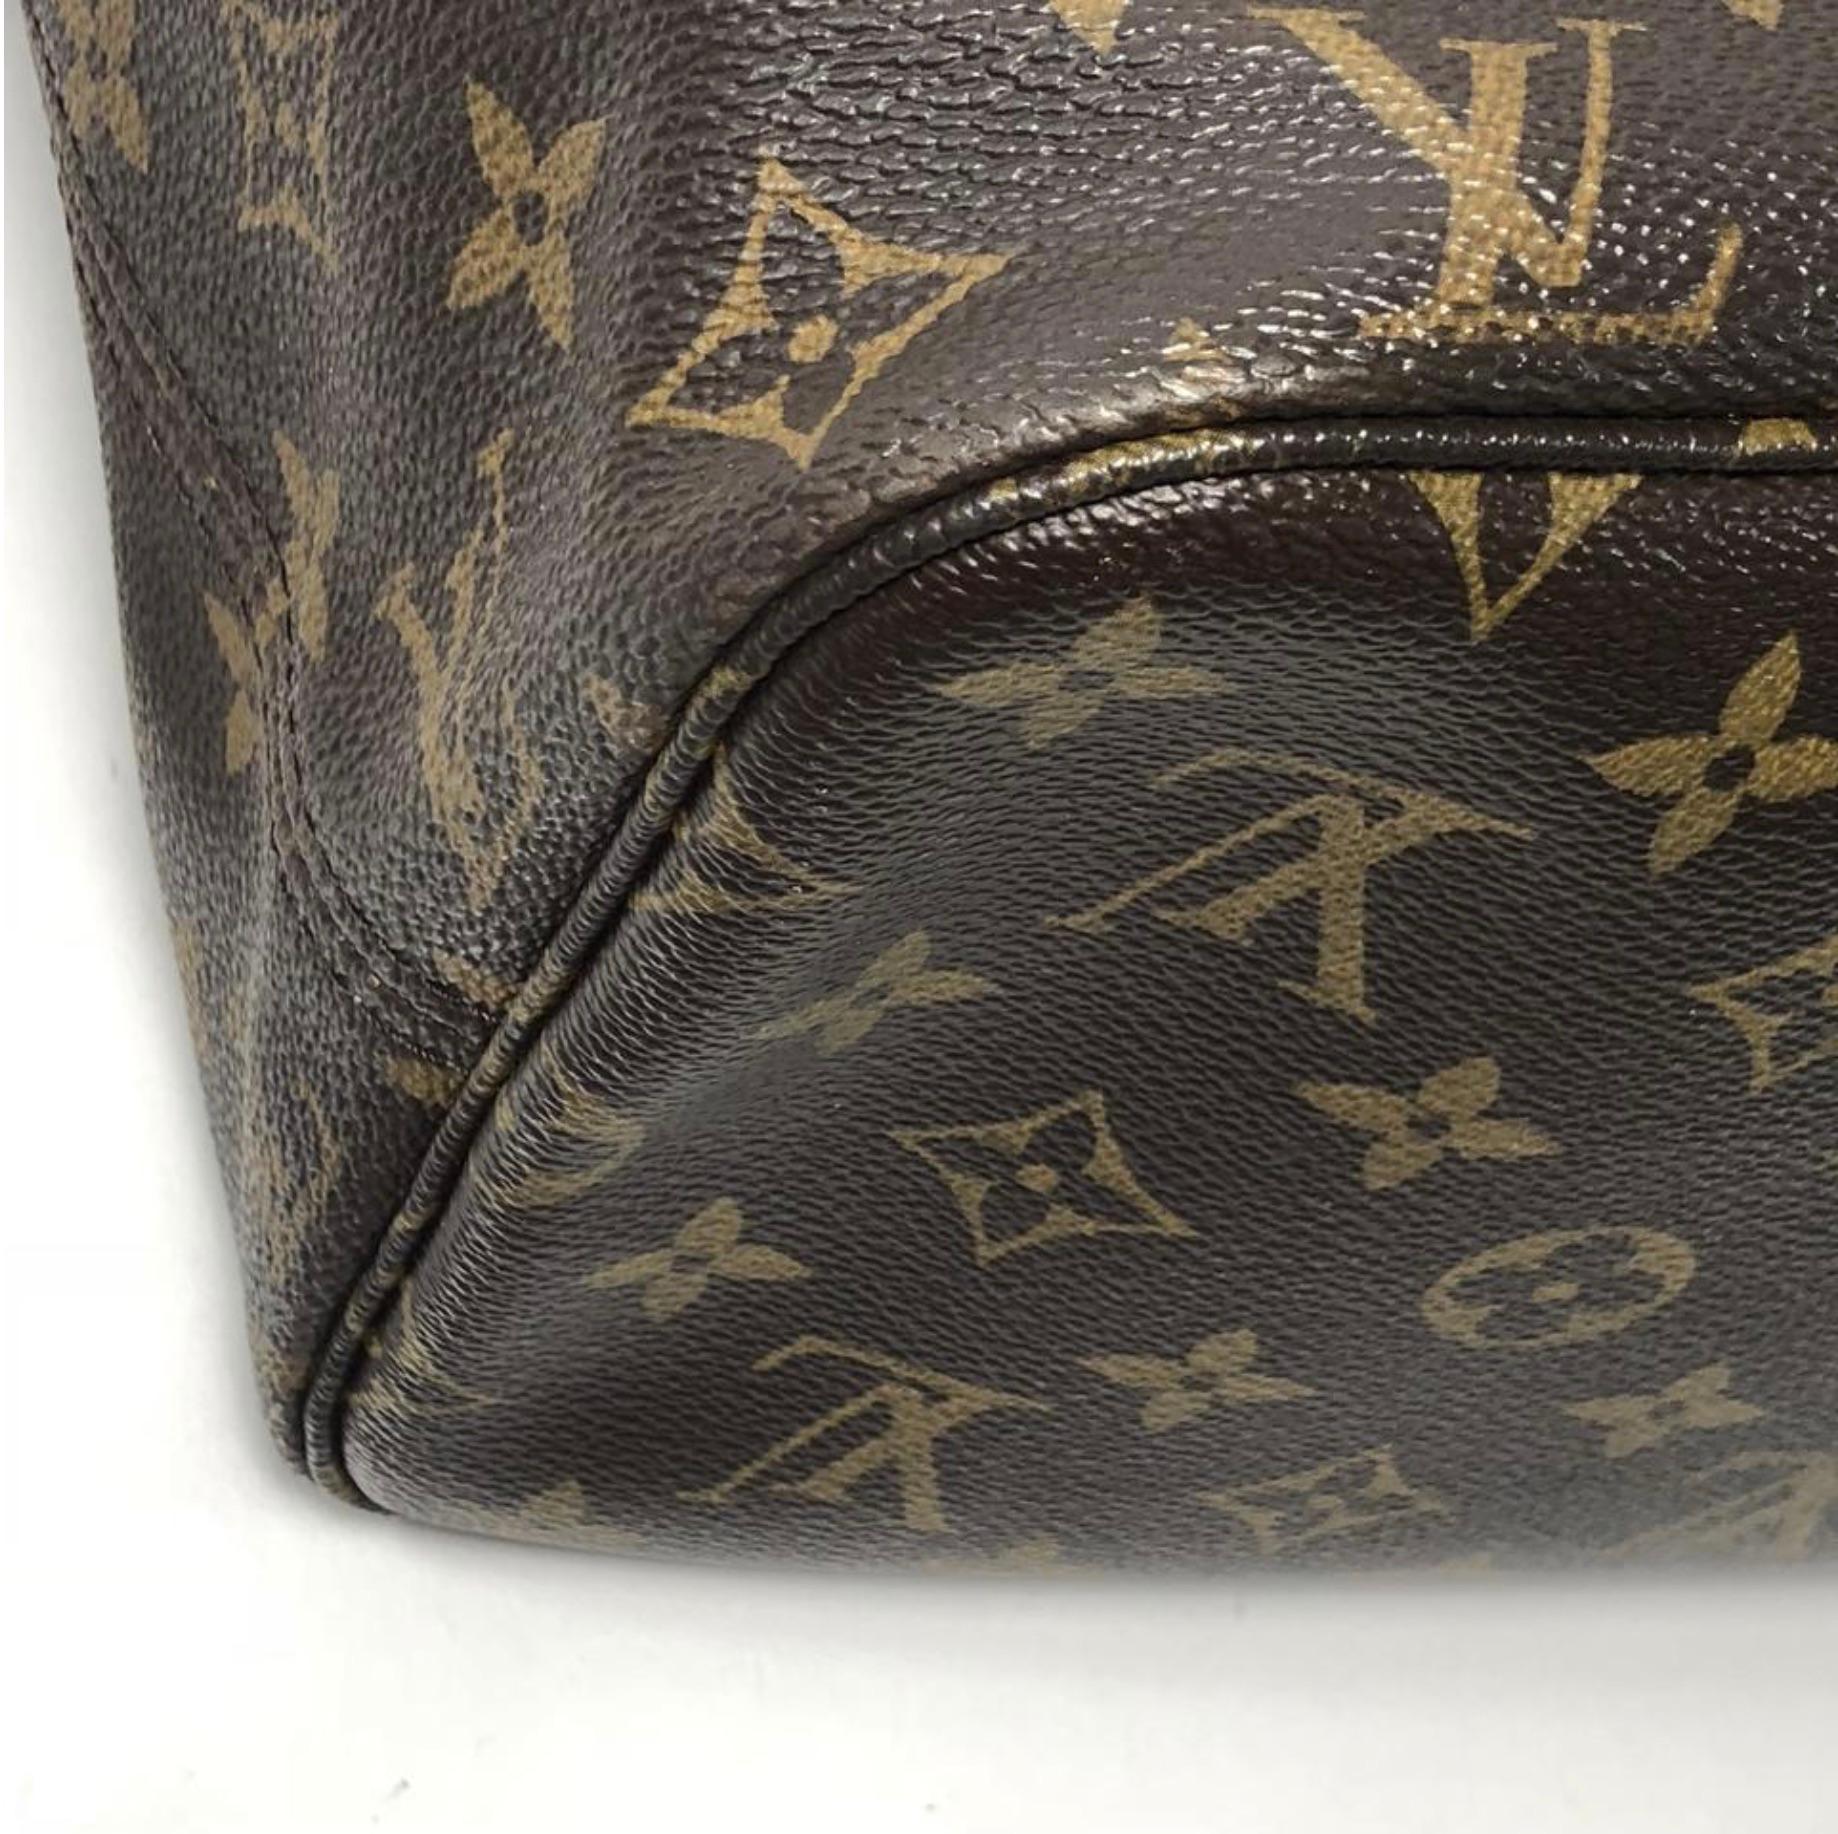  Louis Vuitton Monogram Neverfull MM Tote Shoulder Handbag For Sale 3